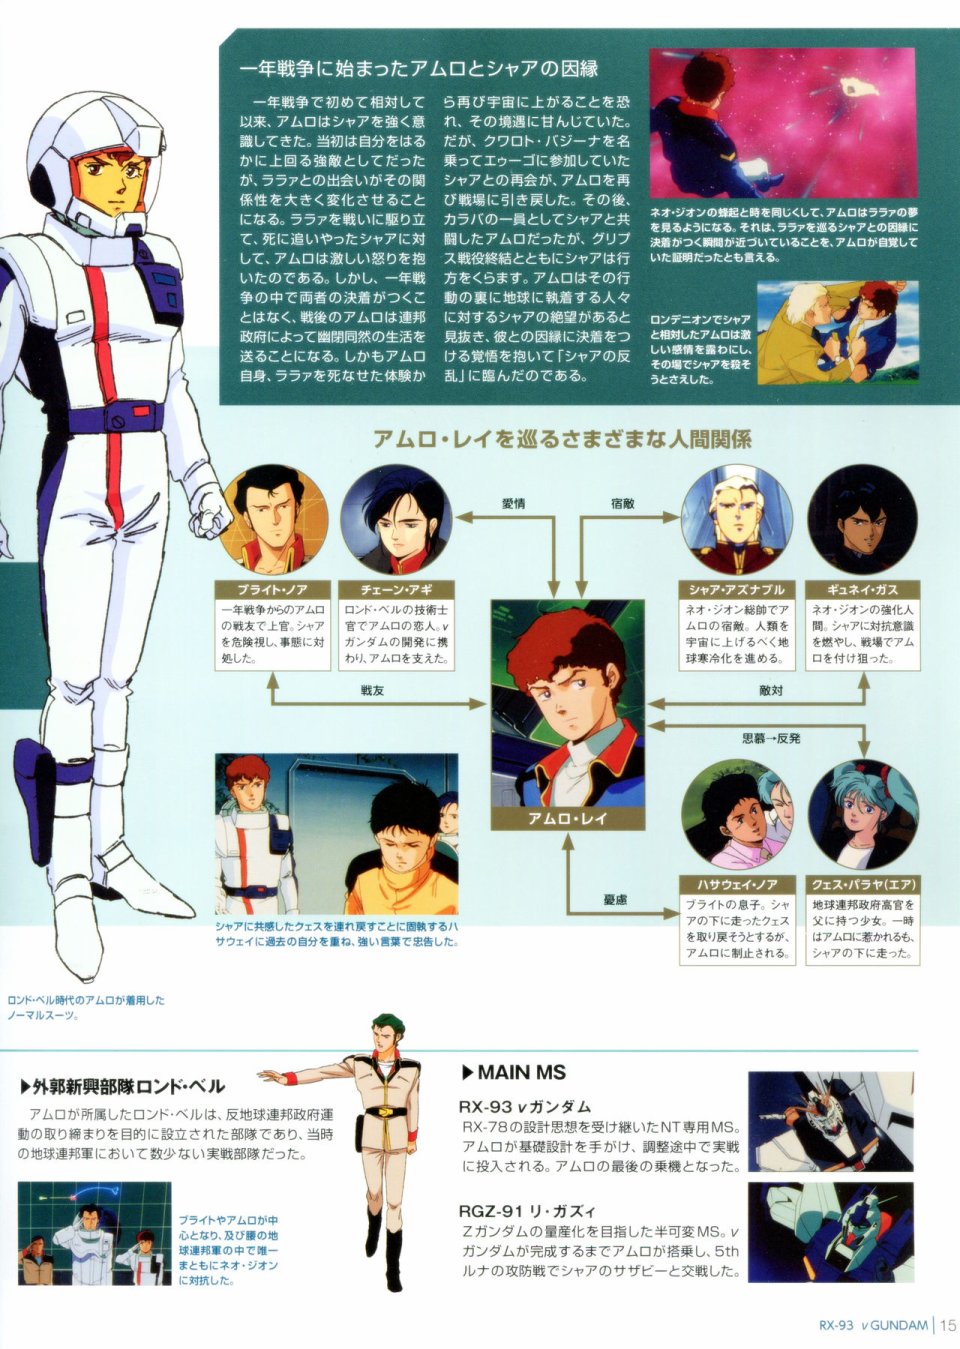 Gundam Mobile Suit Bible - 1卷 - 7